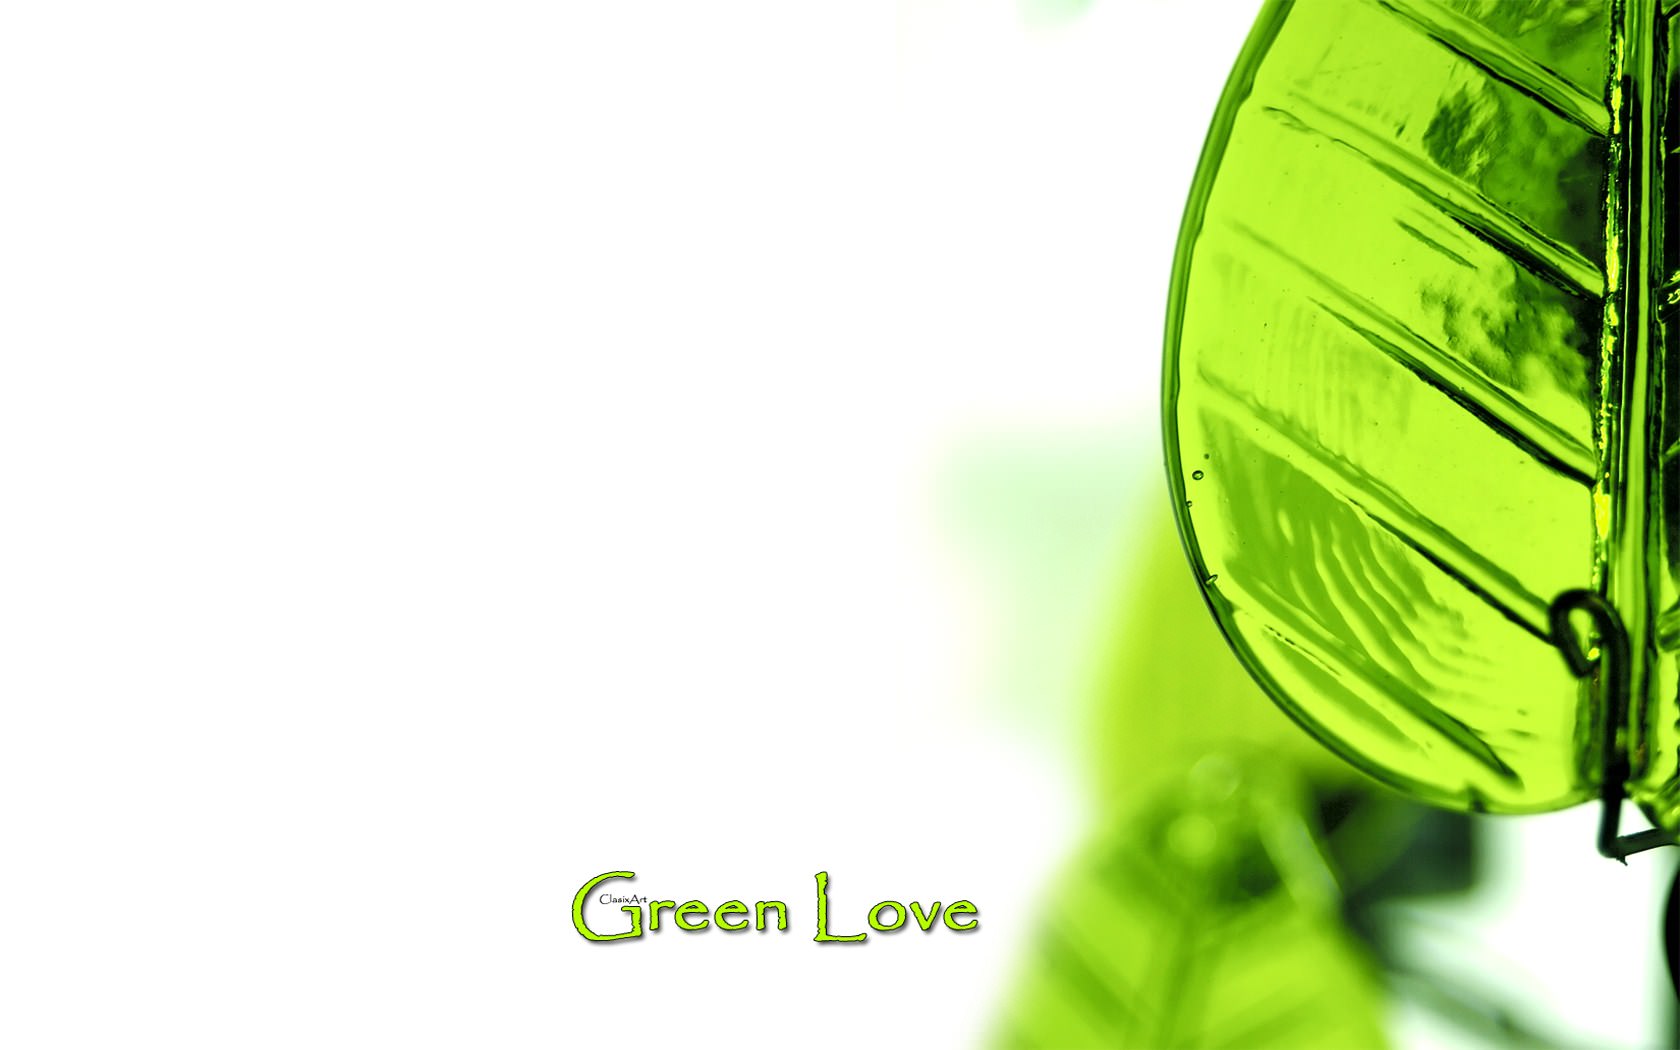 Style Zen Green Love